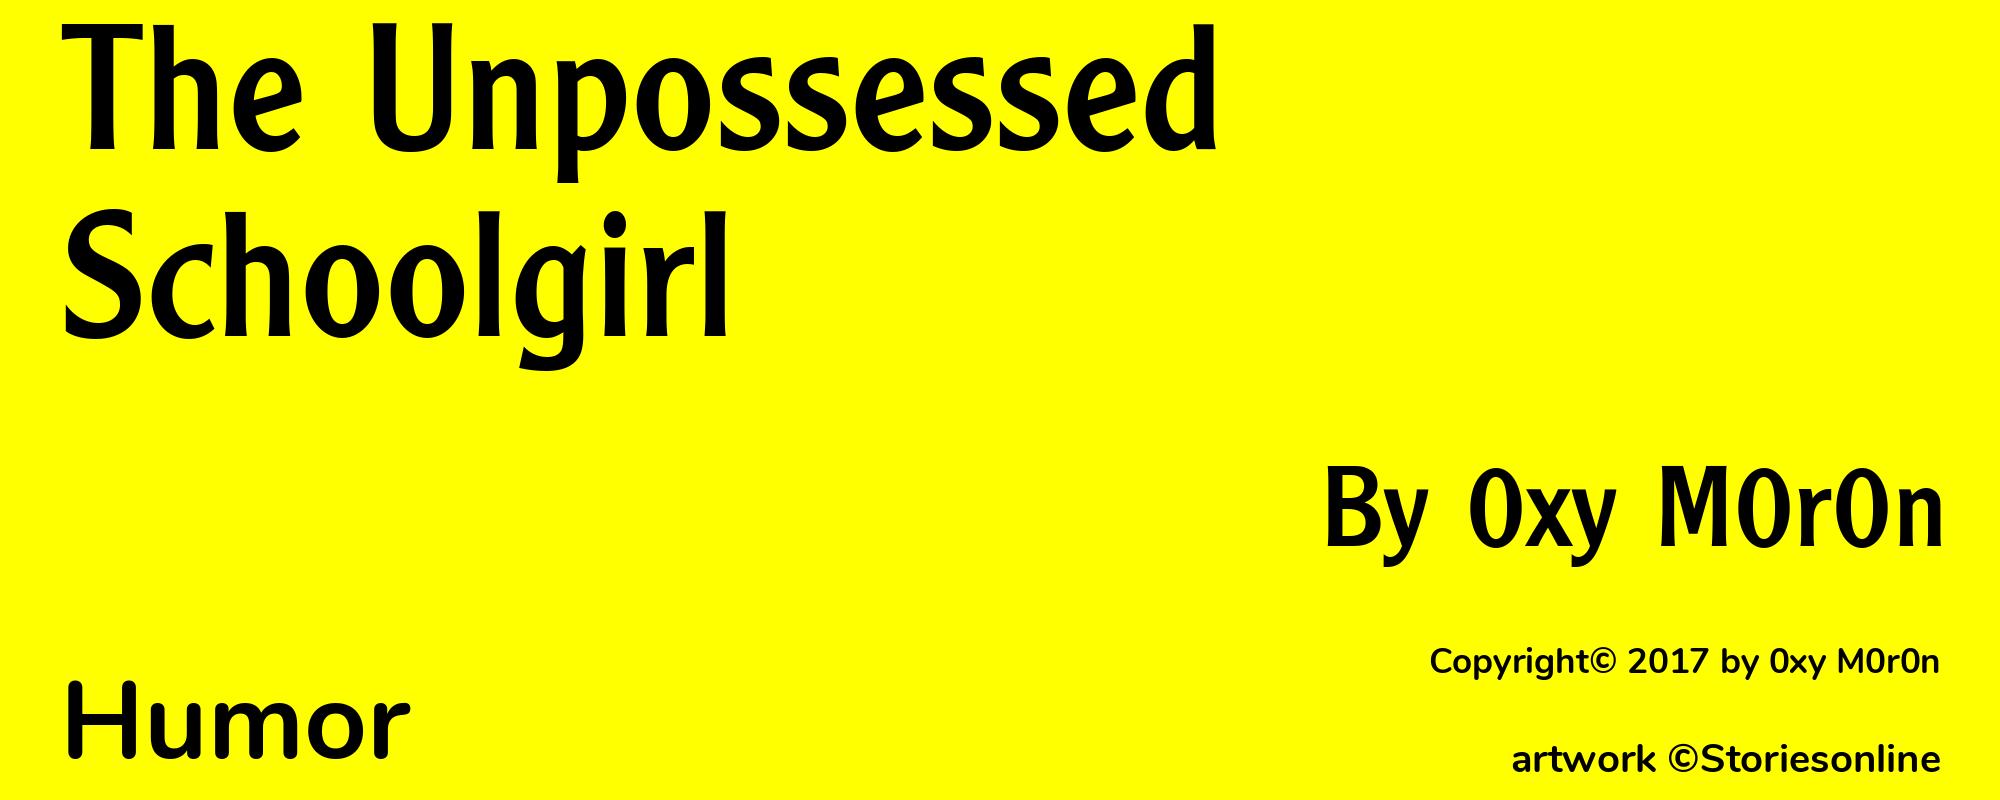 The Unpossessed Schoolgirl - Cover